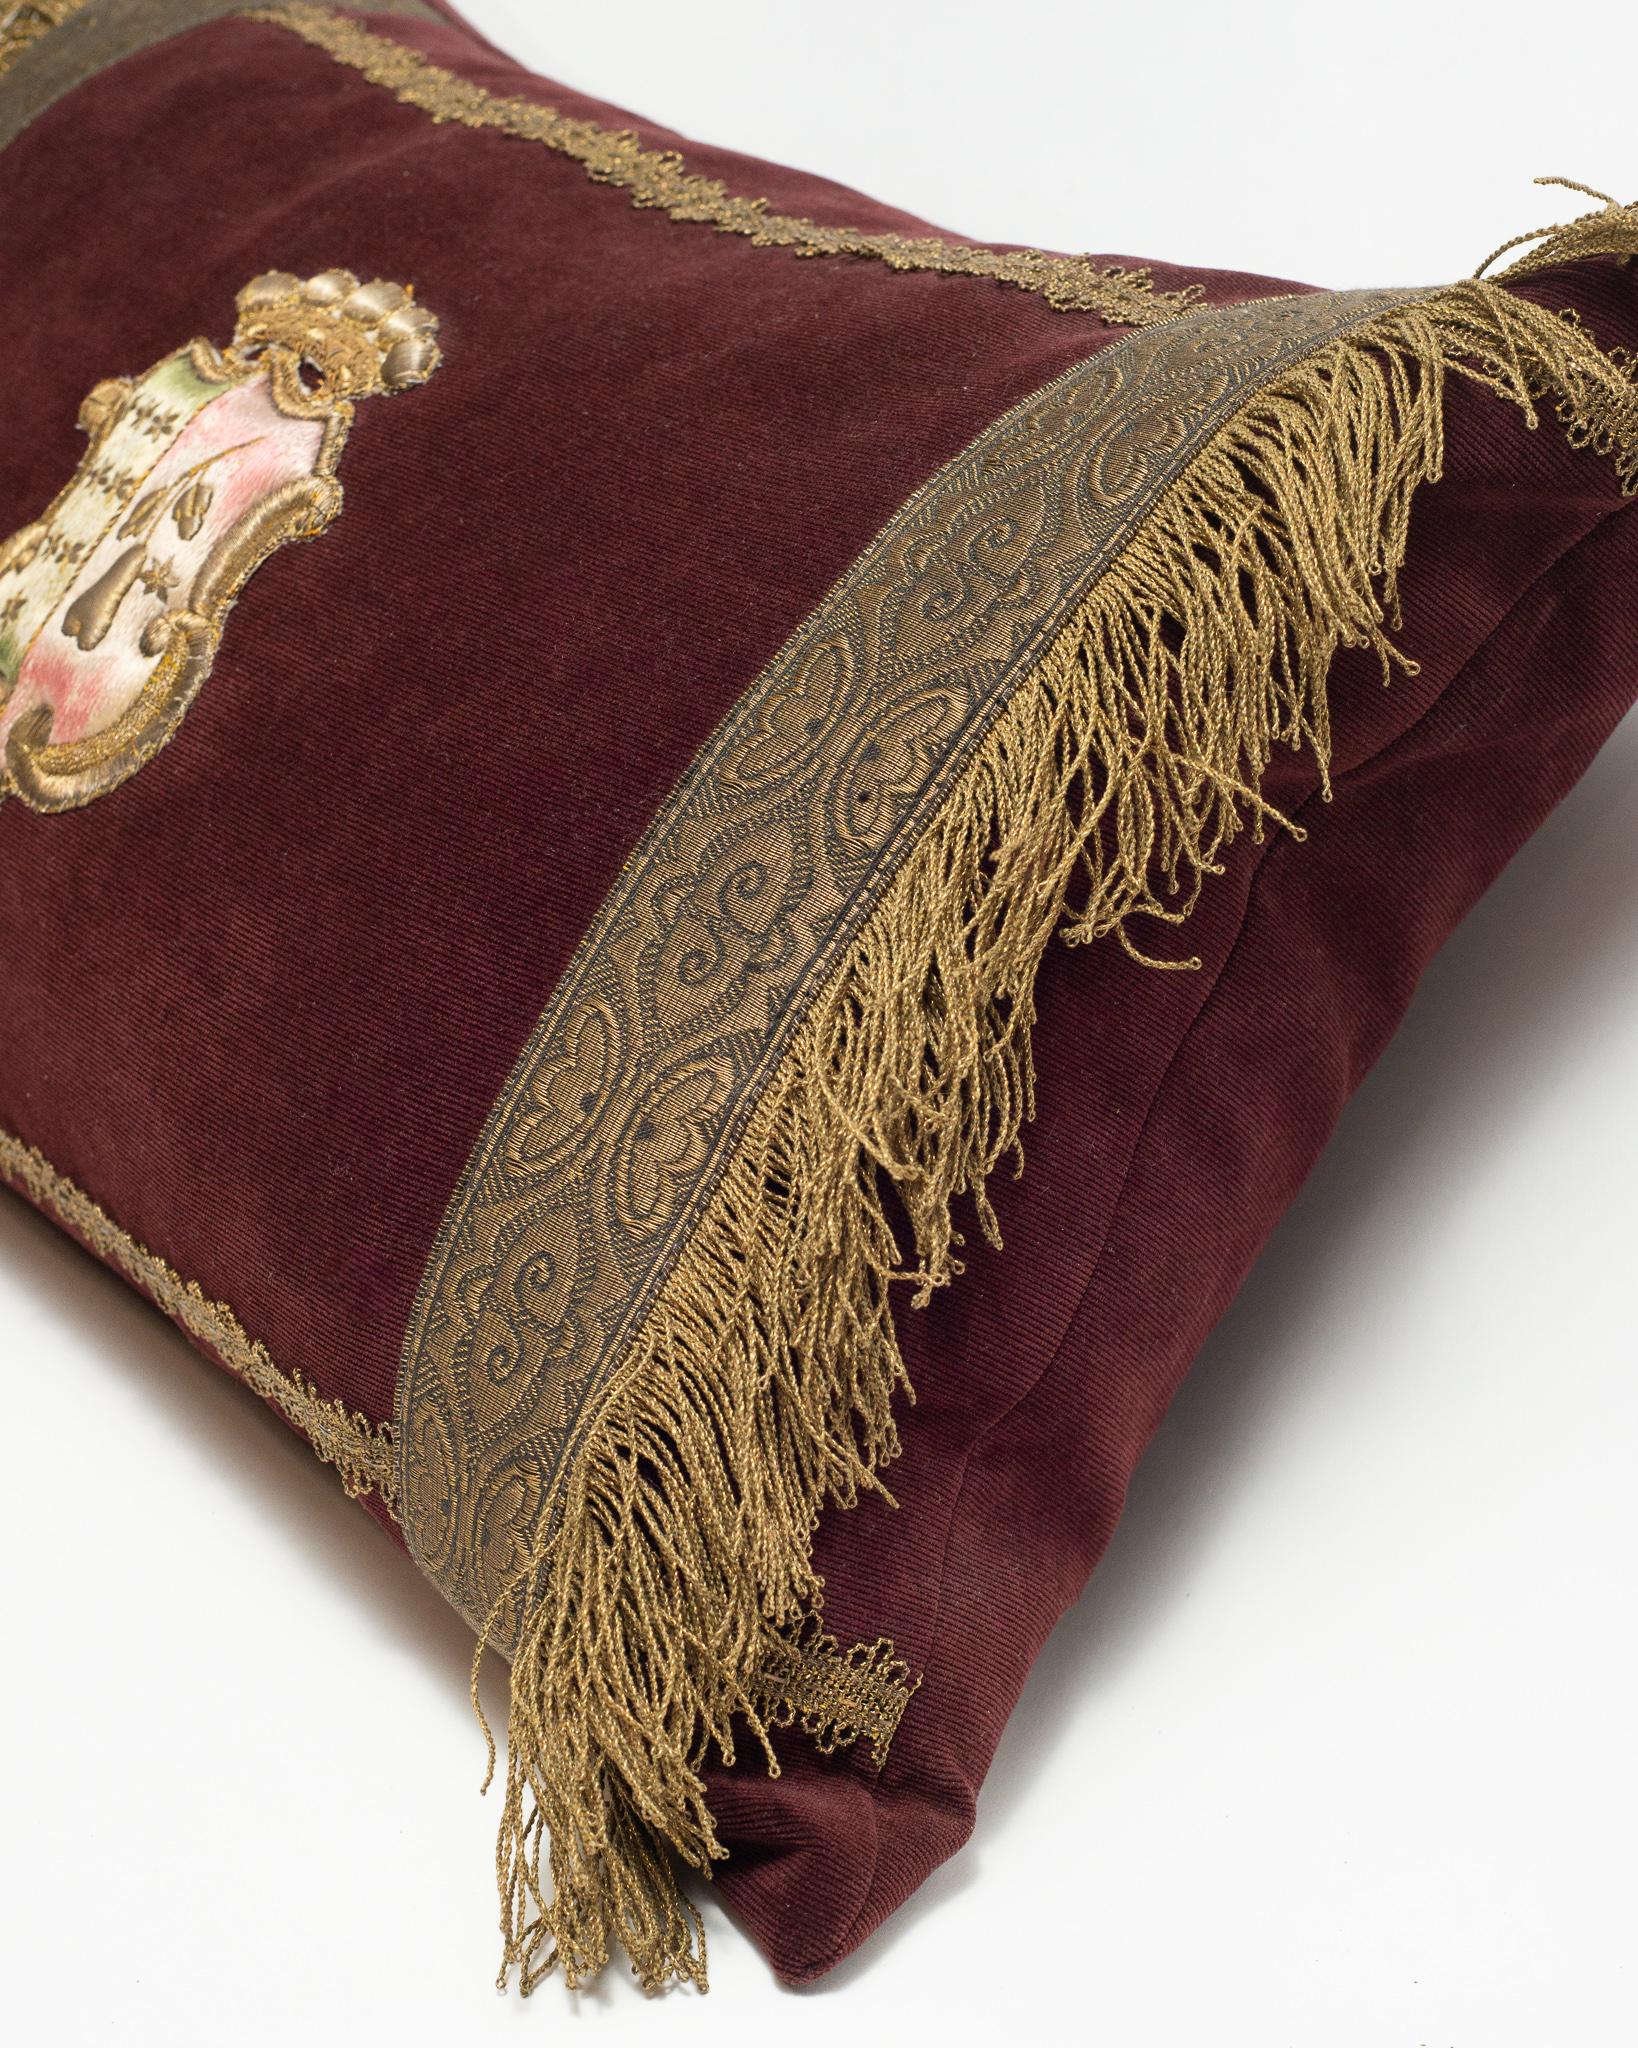 A burgundy velvet pillow with antique metallic gimp and large metallic crest.